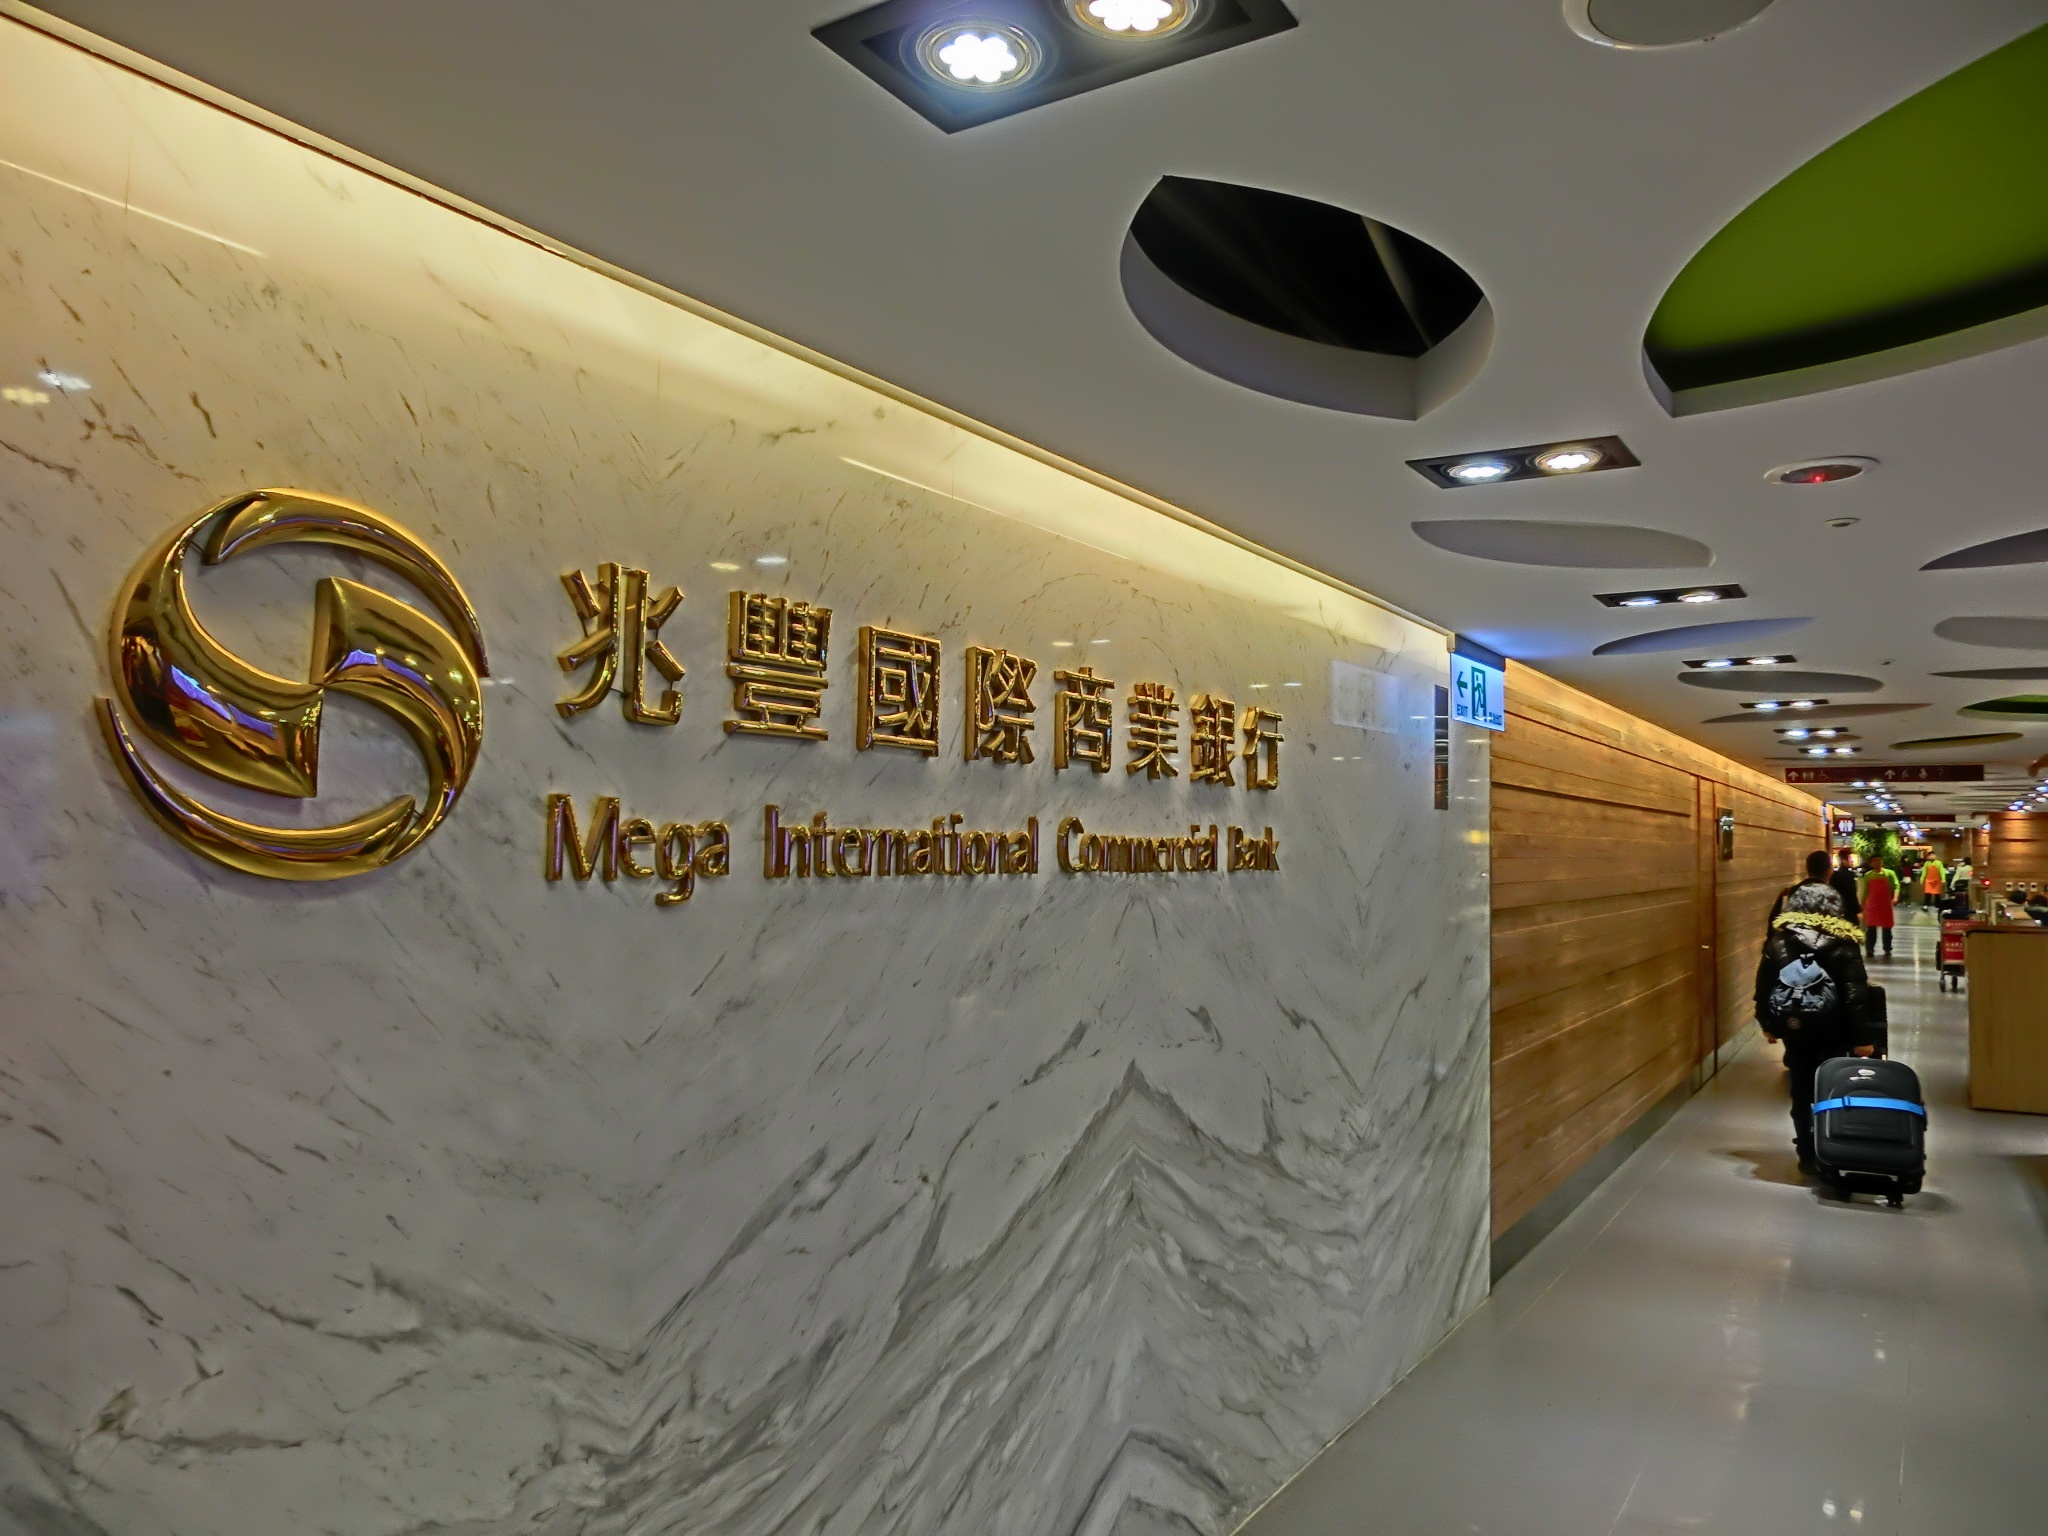  بانک «مگا اینترنشنال کامرشیال» تایوان 